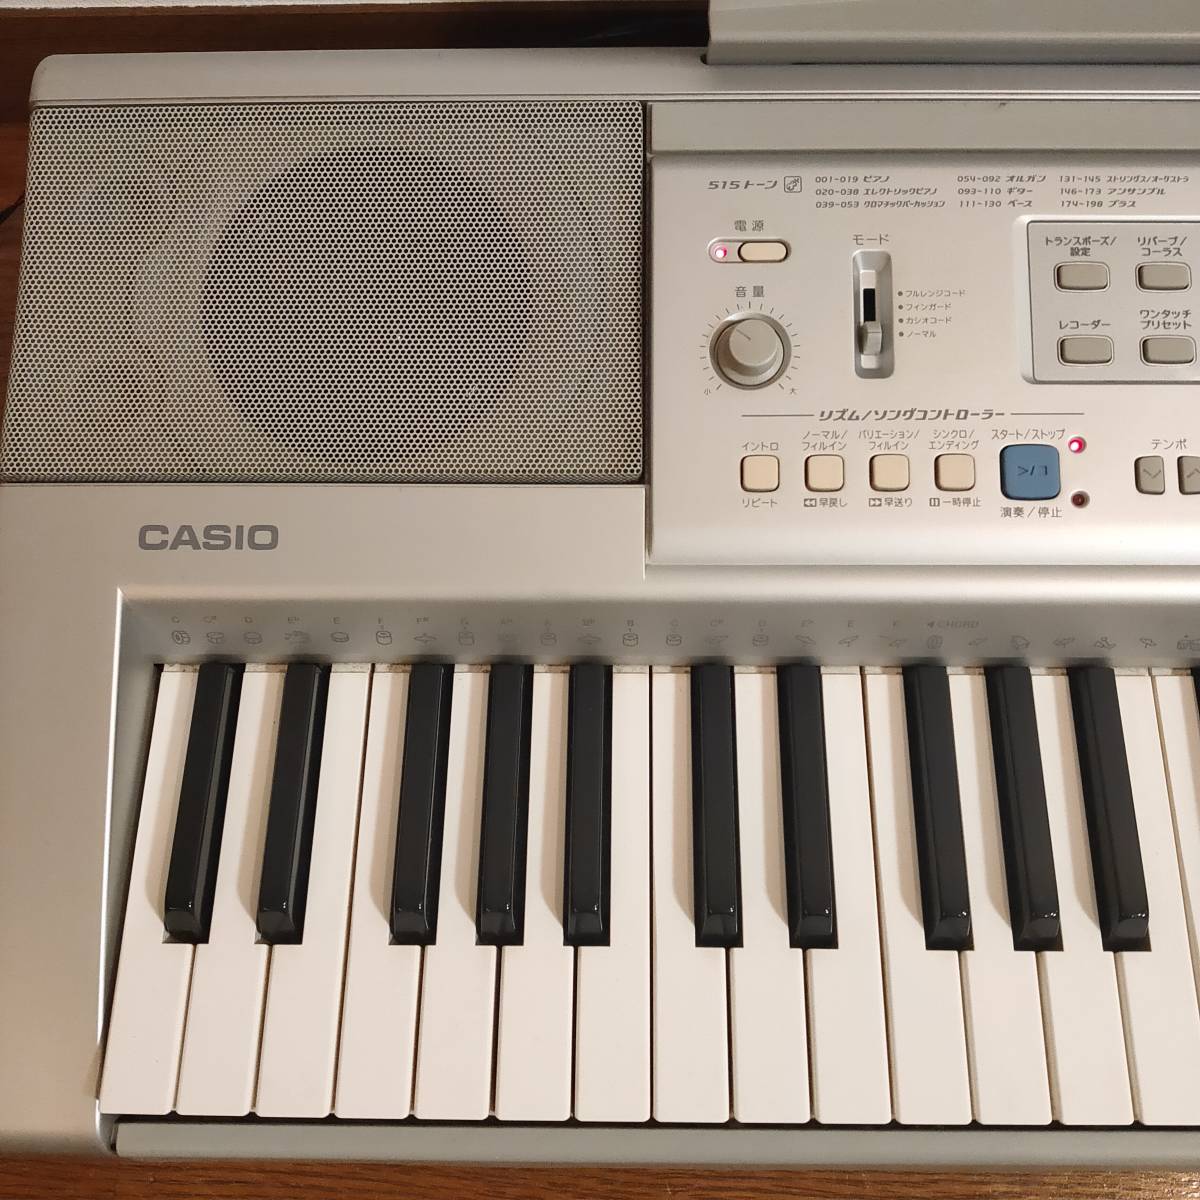 CASIO CTK-810 Casio электронный клавиатура электронное пианино 61 клавиатура 